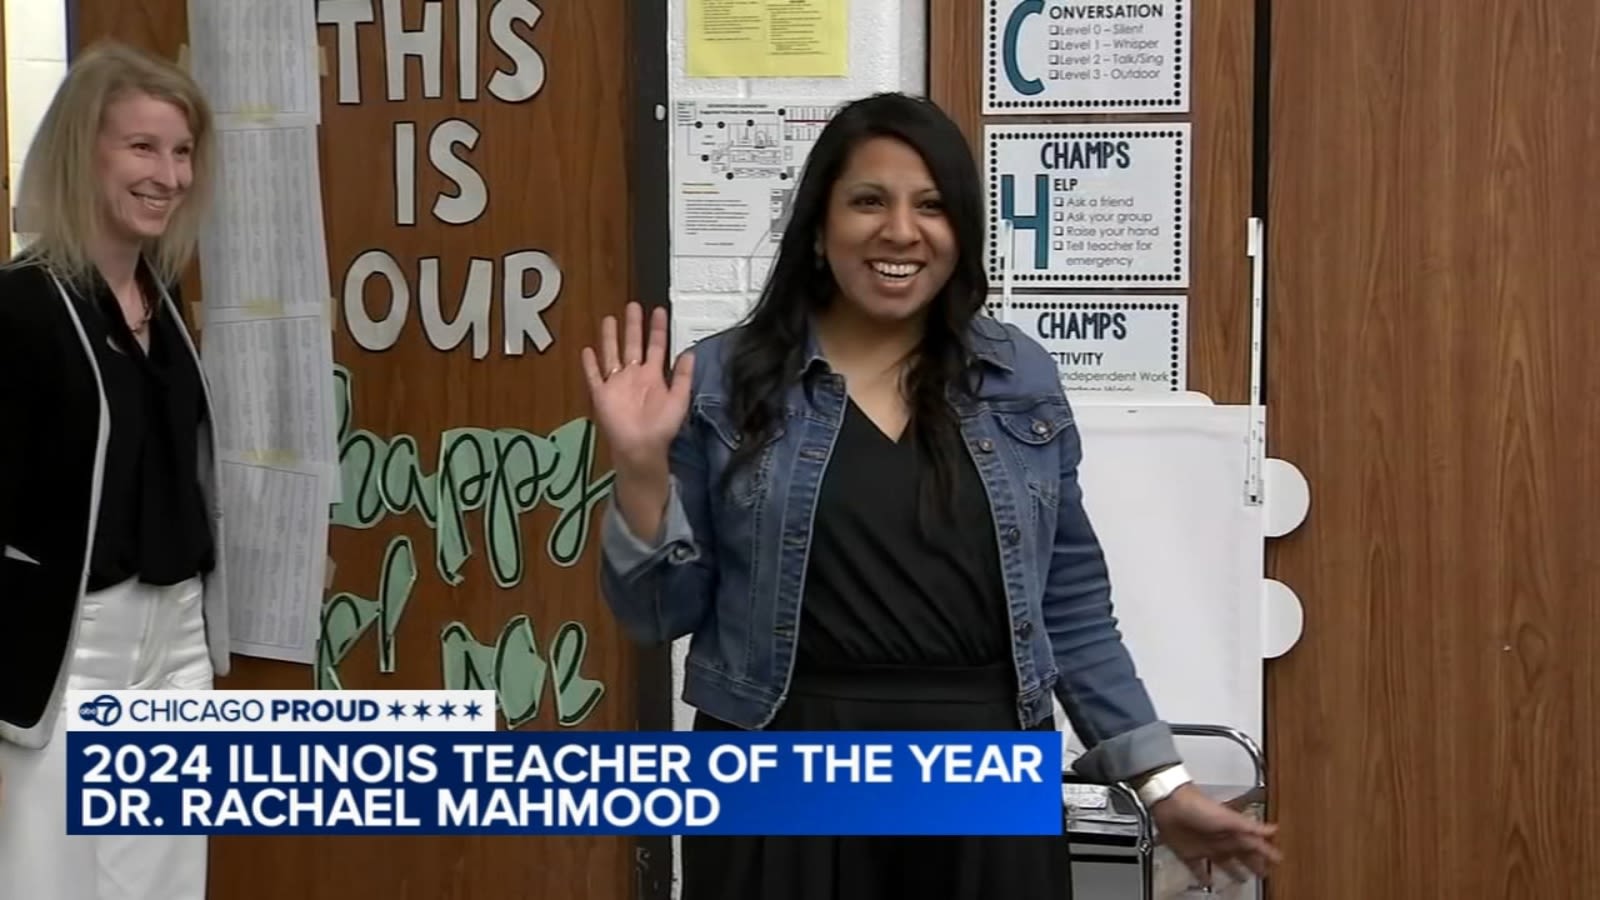 Georgetown Elementary School teacher honored as Illinois' Teacher of the Year 2024